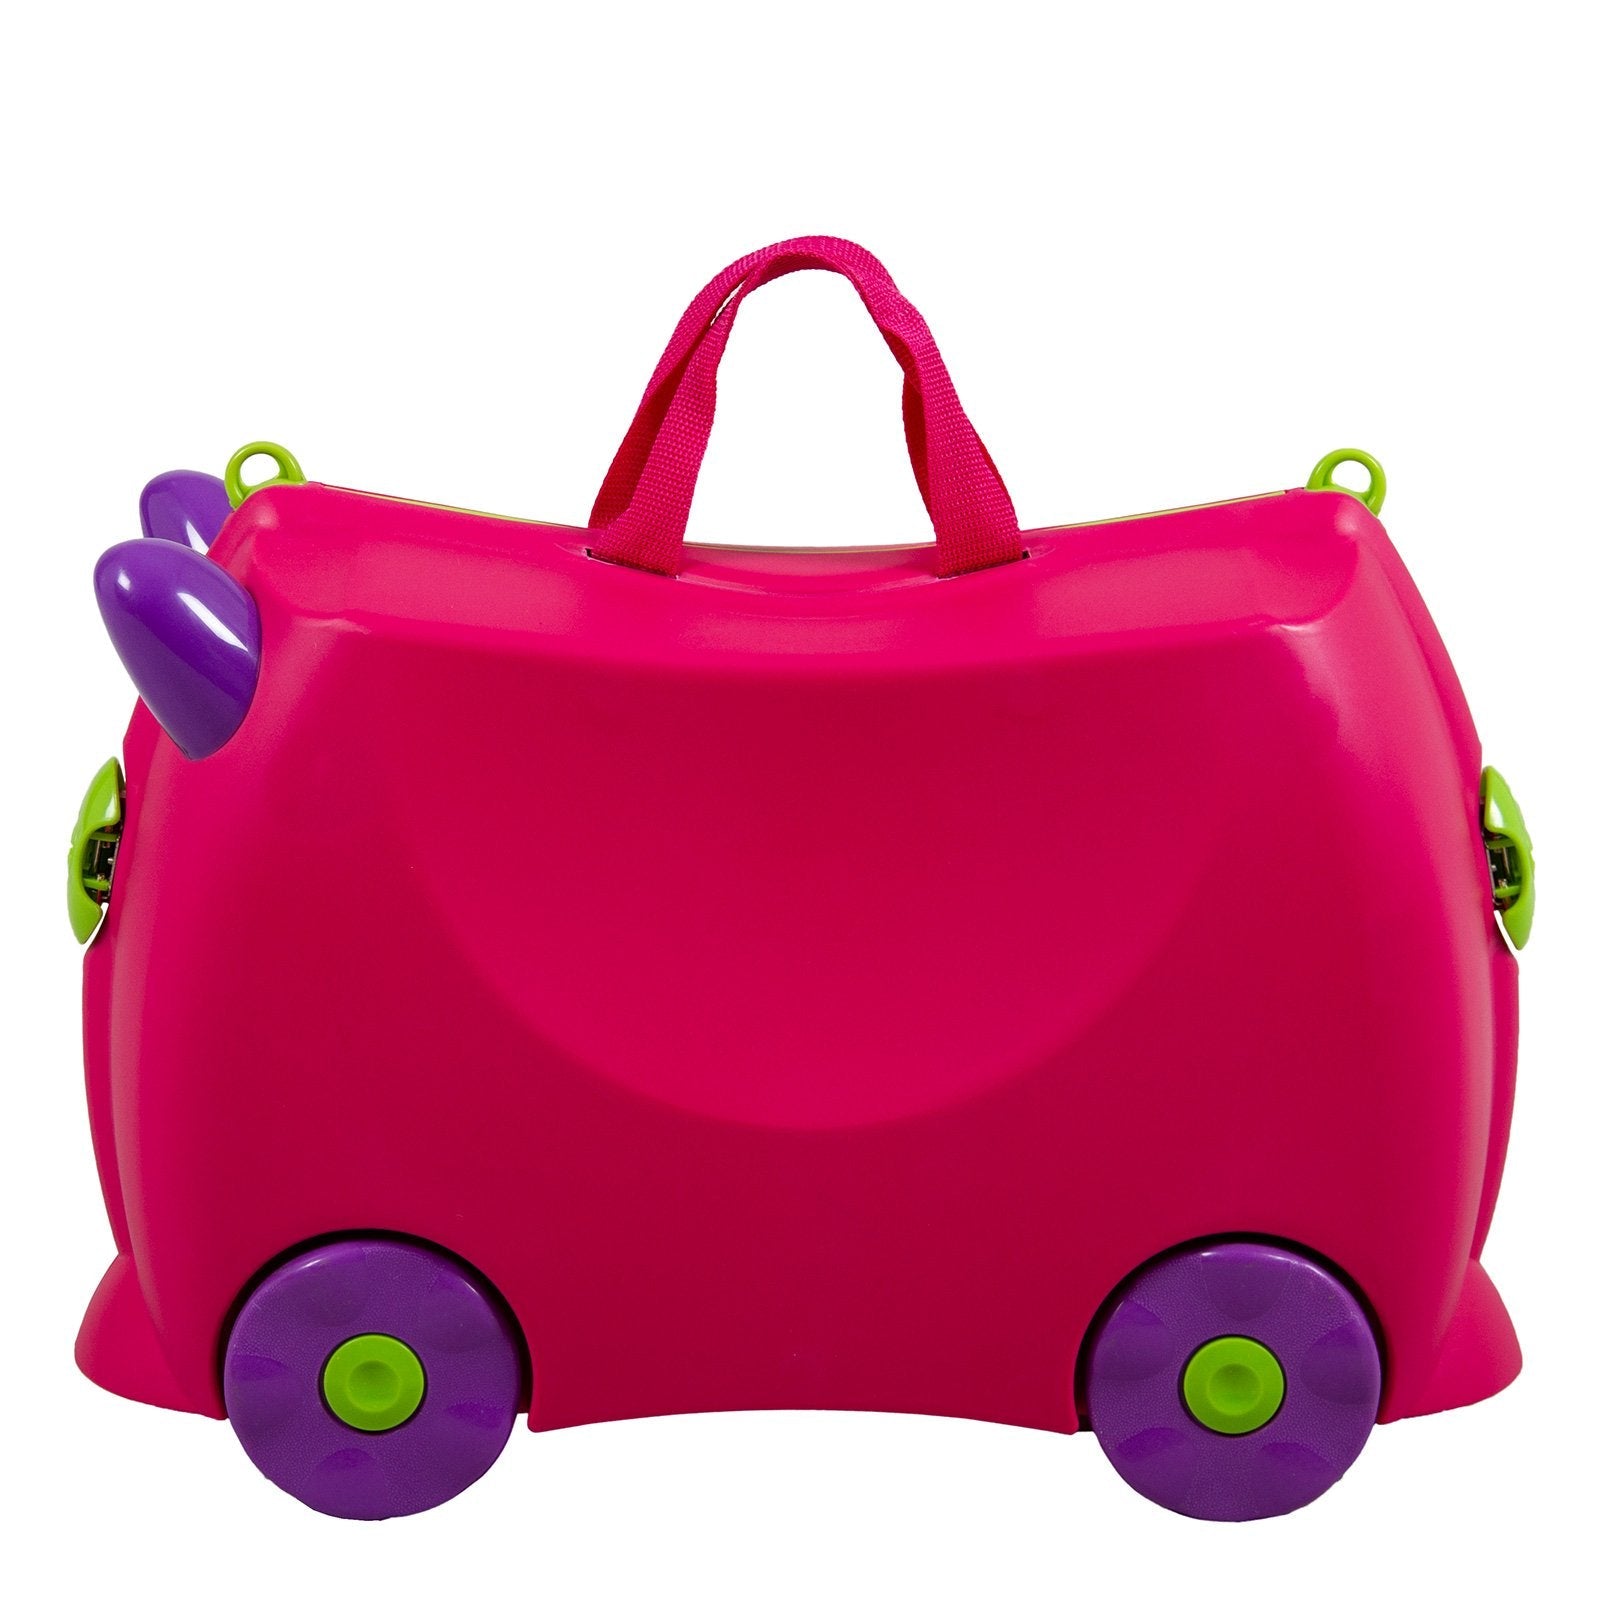 Kiddicare Bon Voyage Kids Ride On Suitcase Luggage Travel Bag - Pretty in Pink